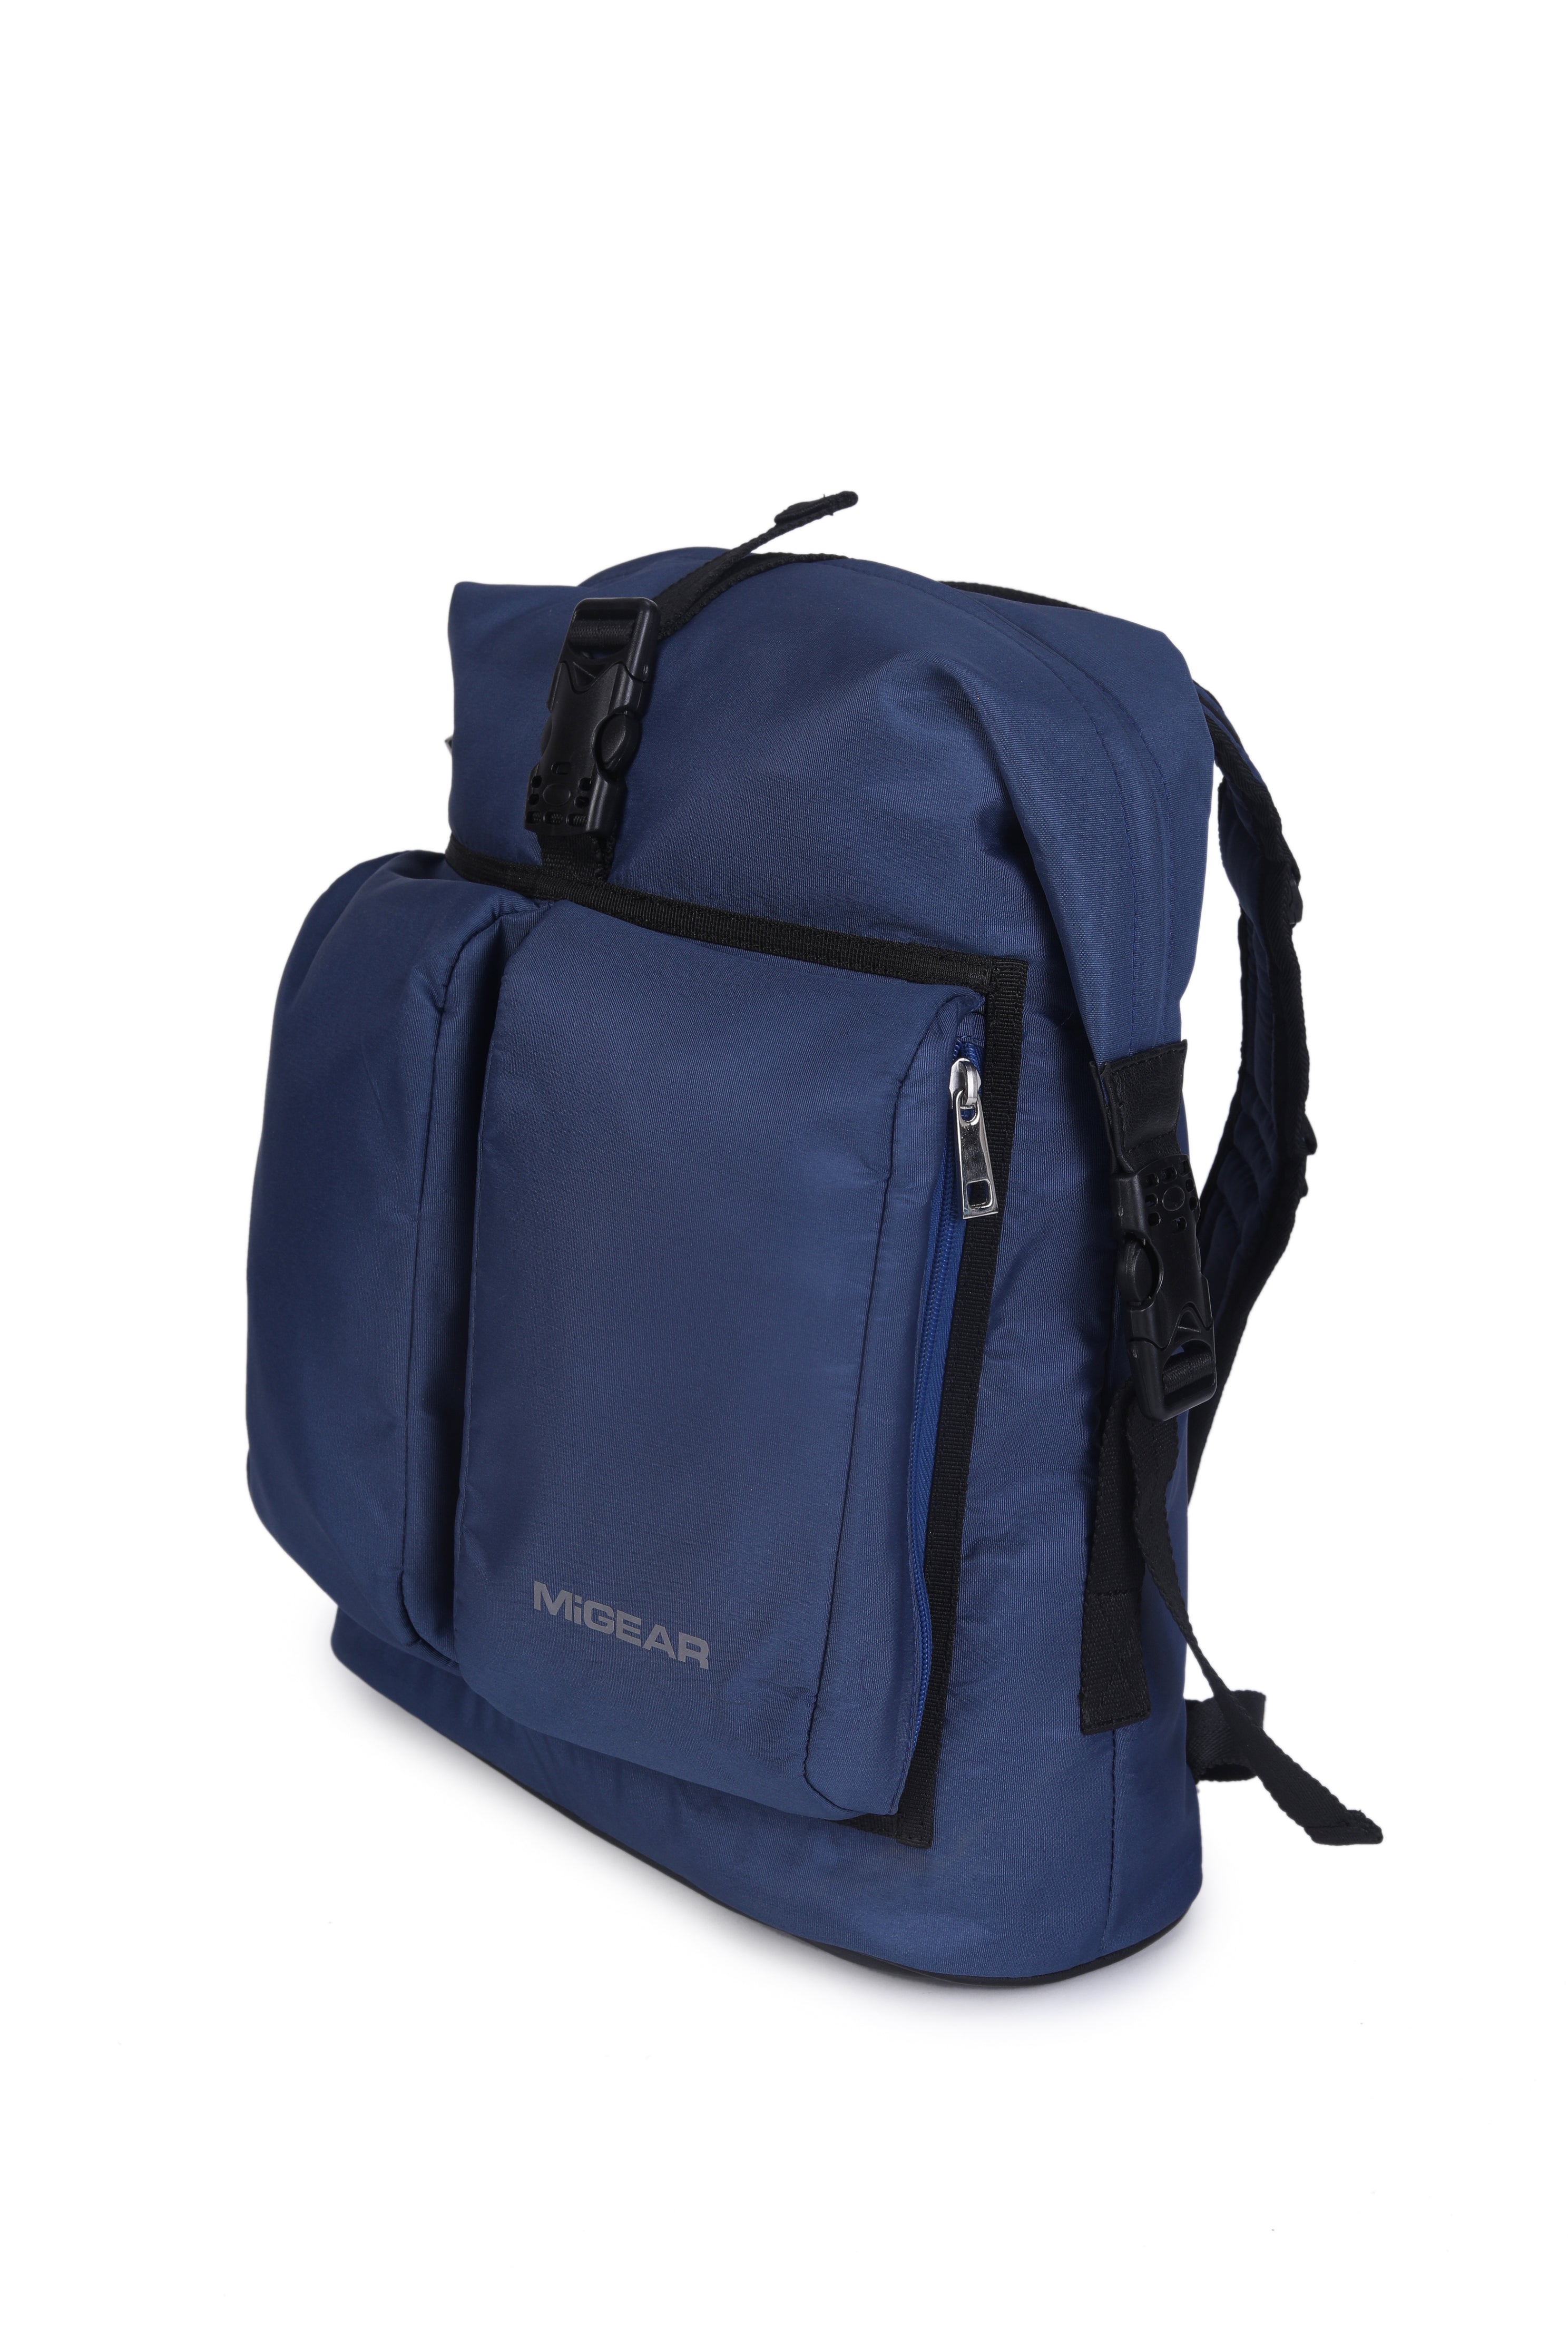 NomadKnapsack Backpack